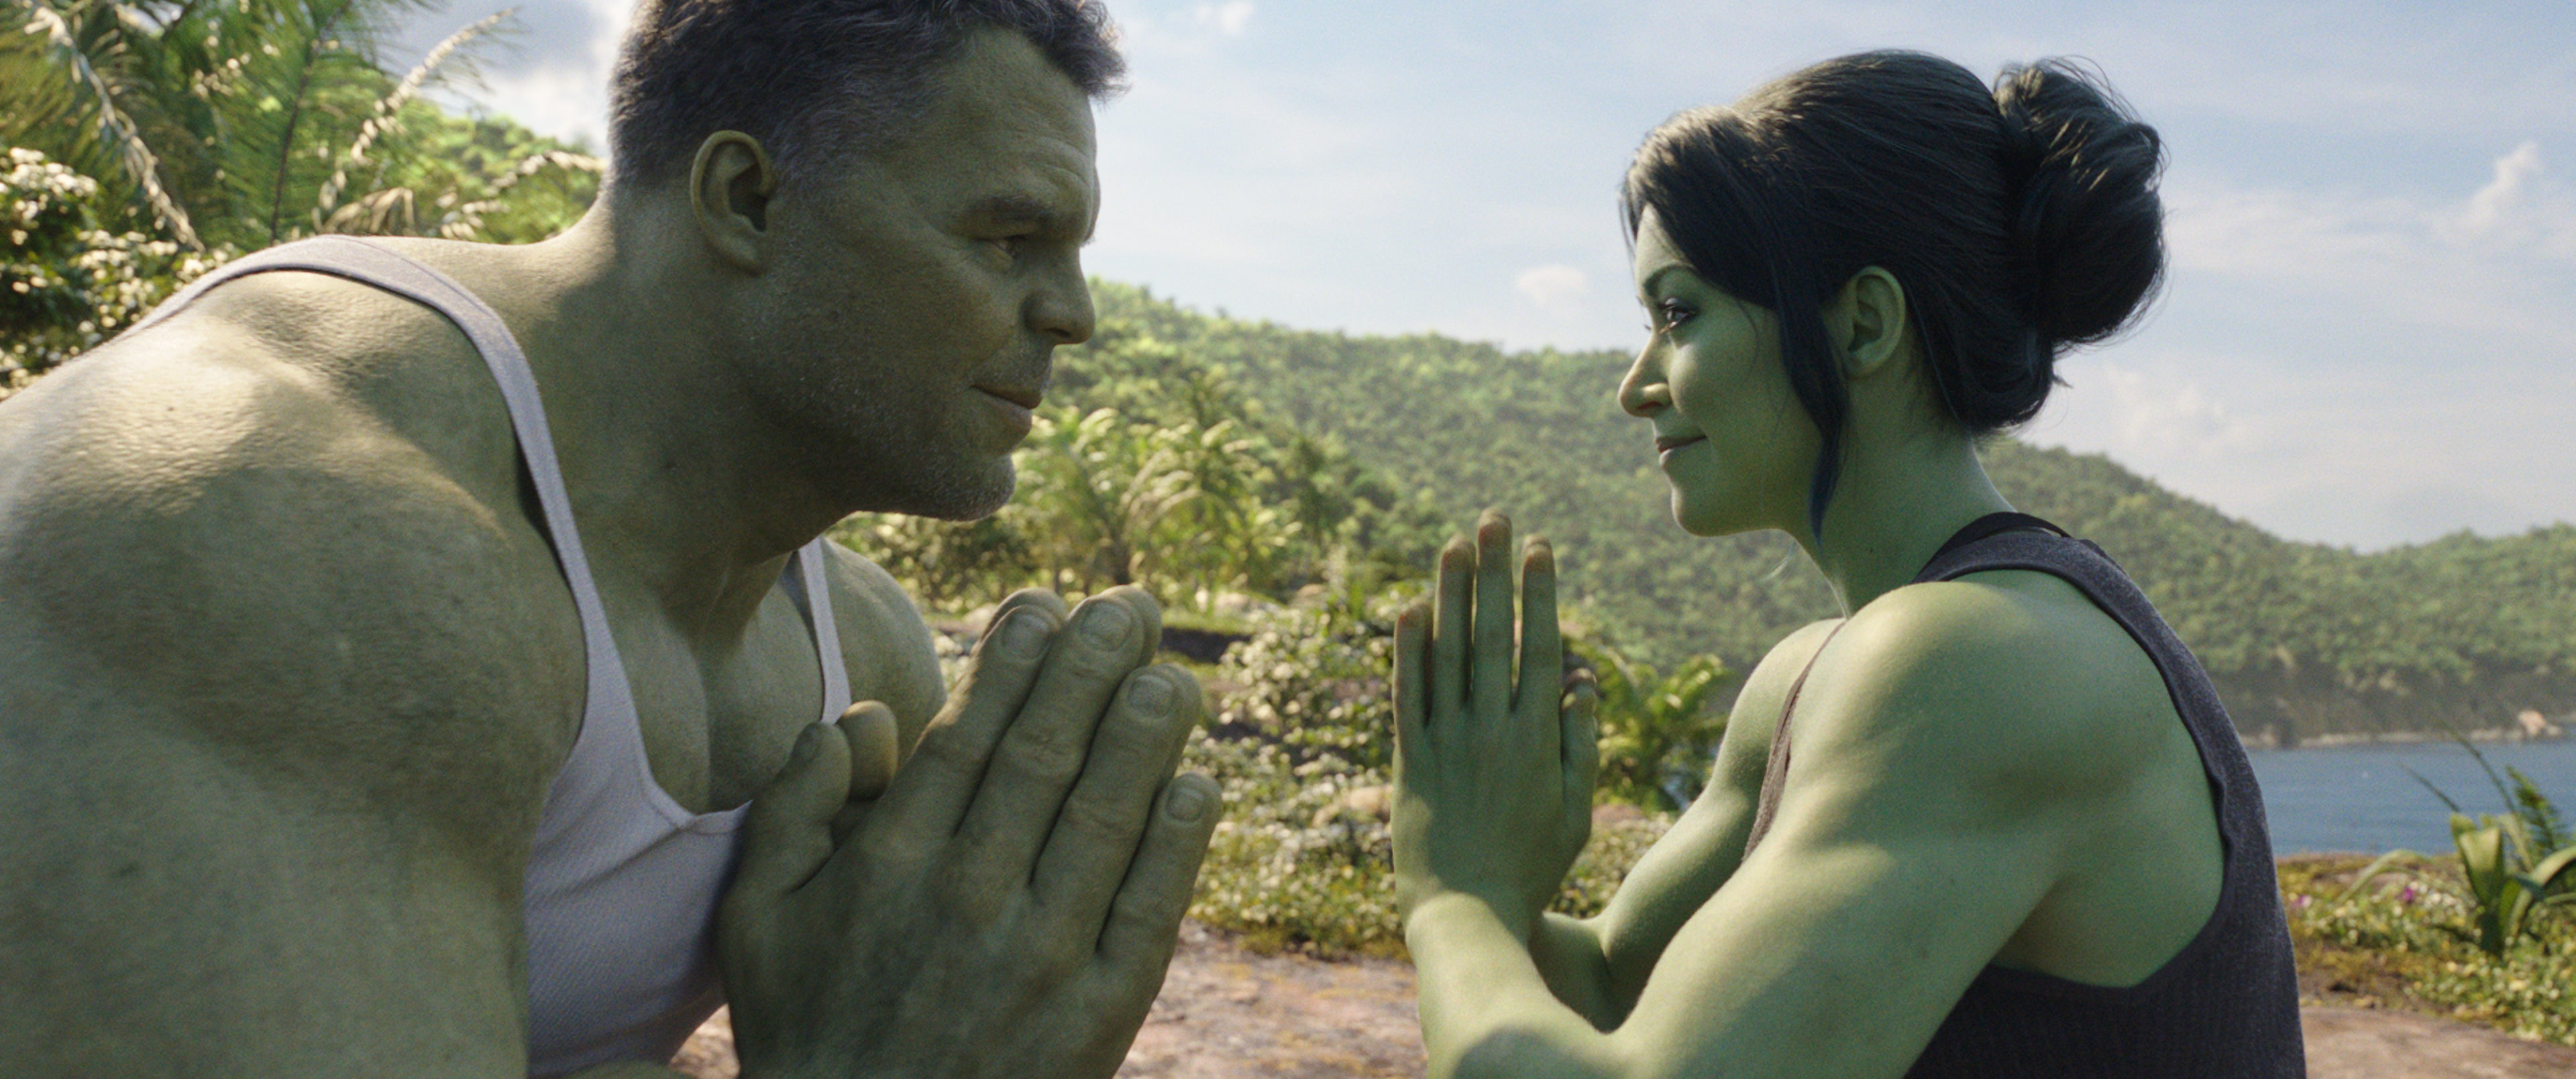 Hulk and She-Hulk facing each other